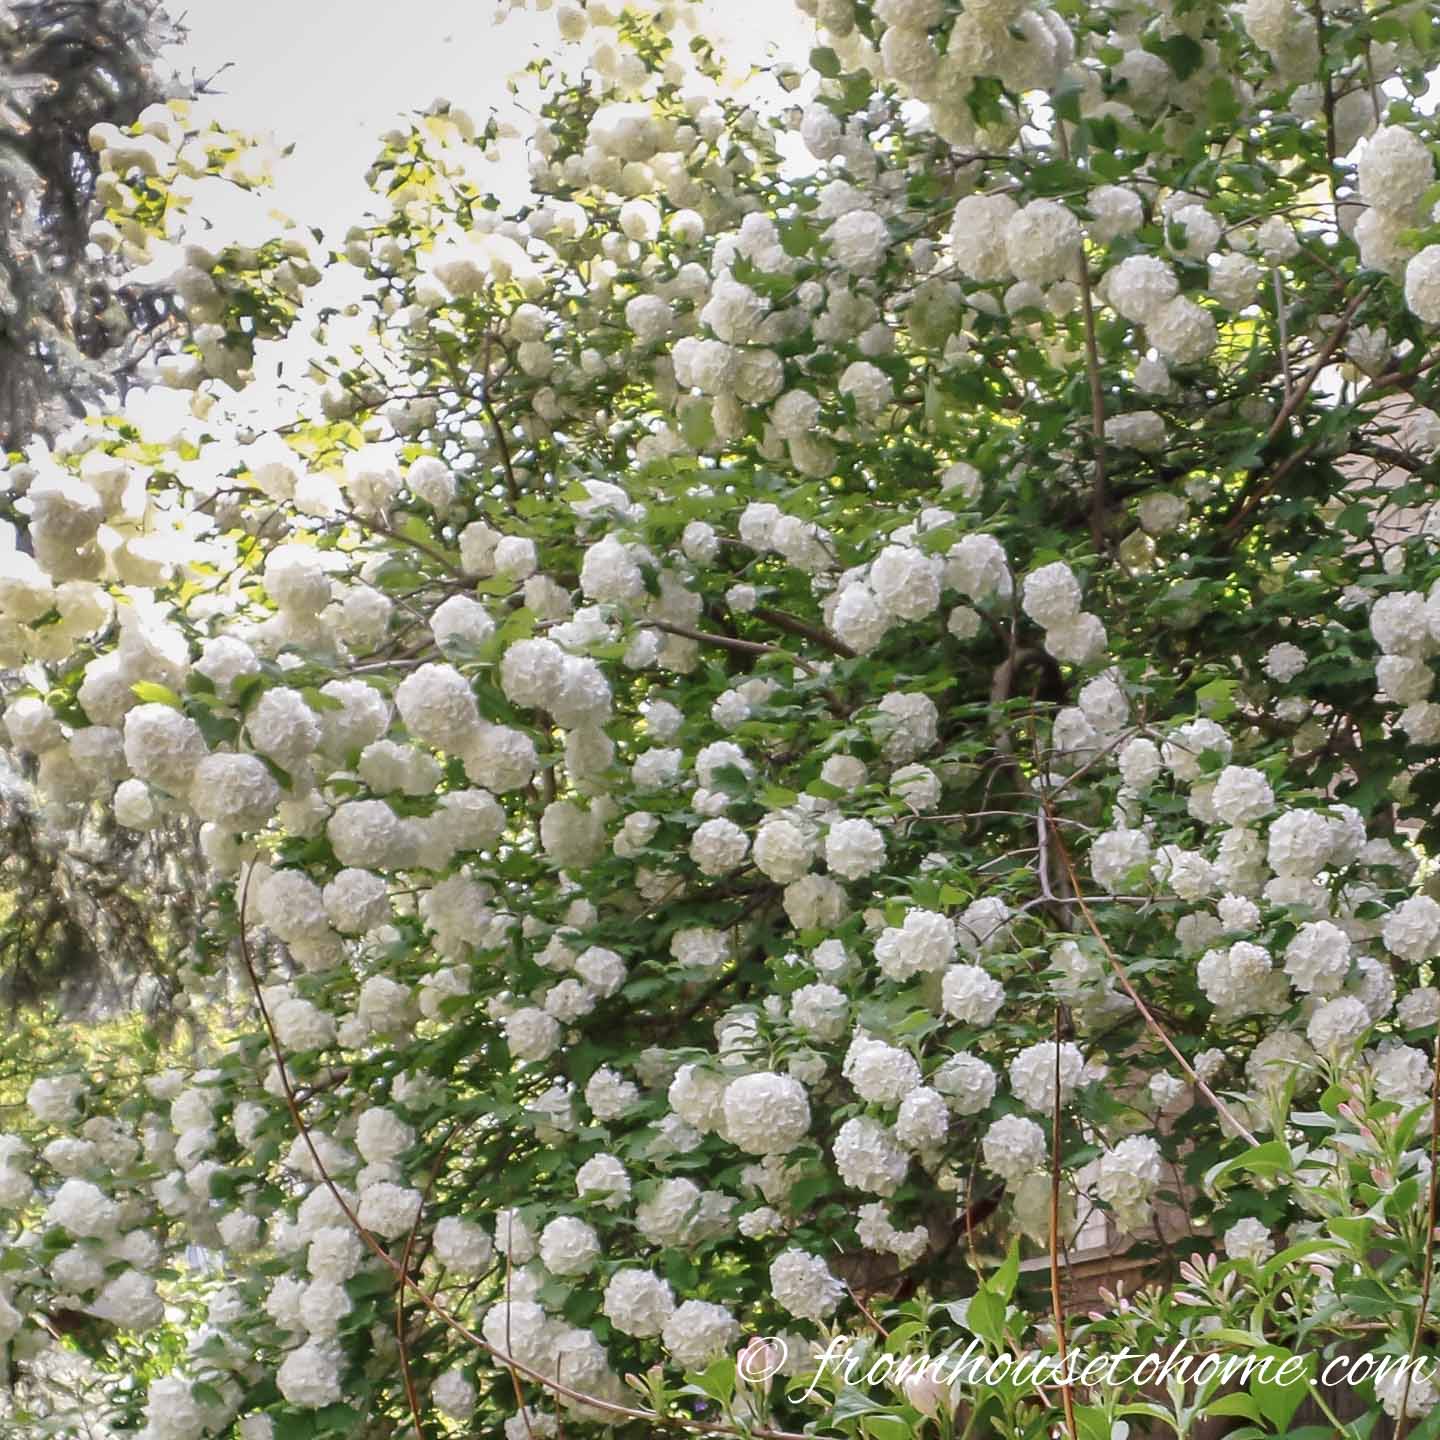 Viburnum bush covered in white flowers